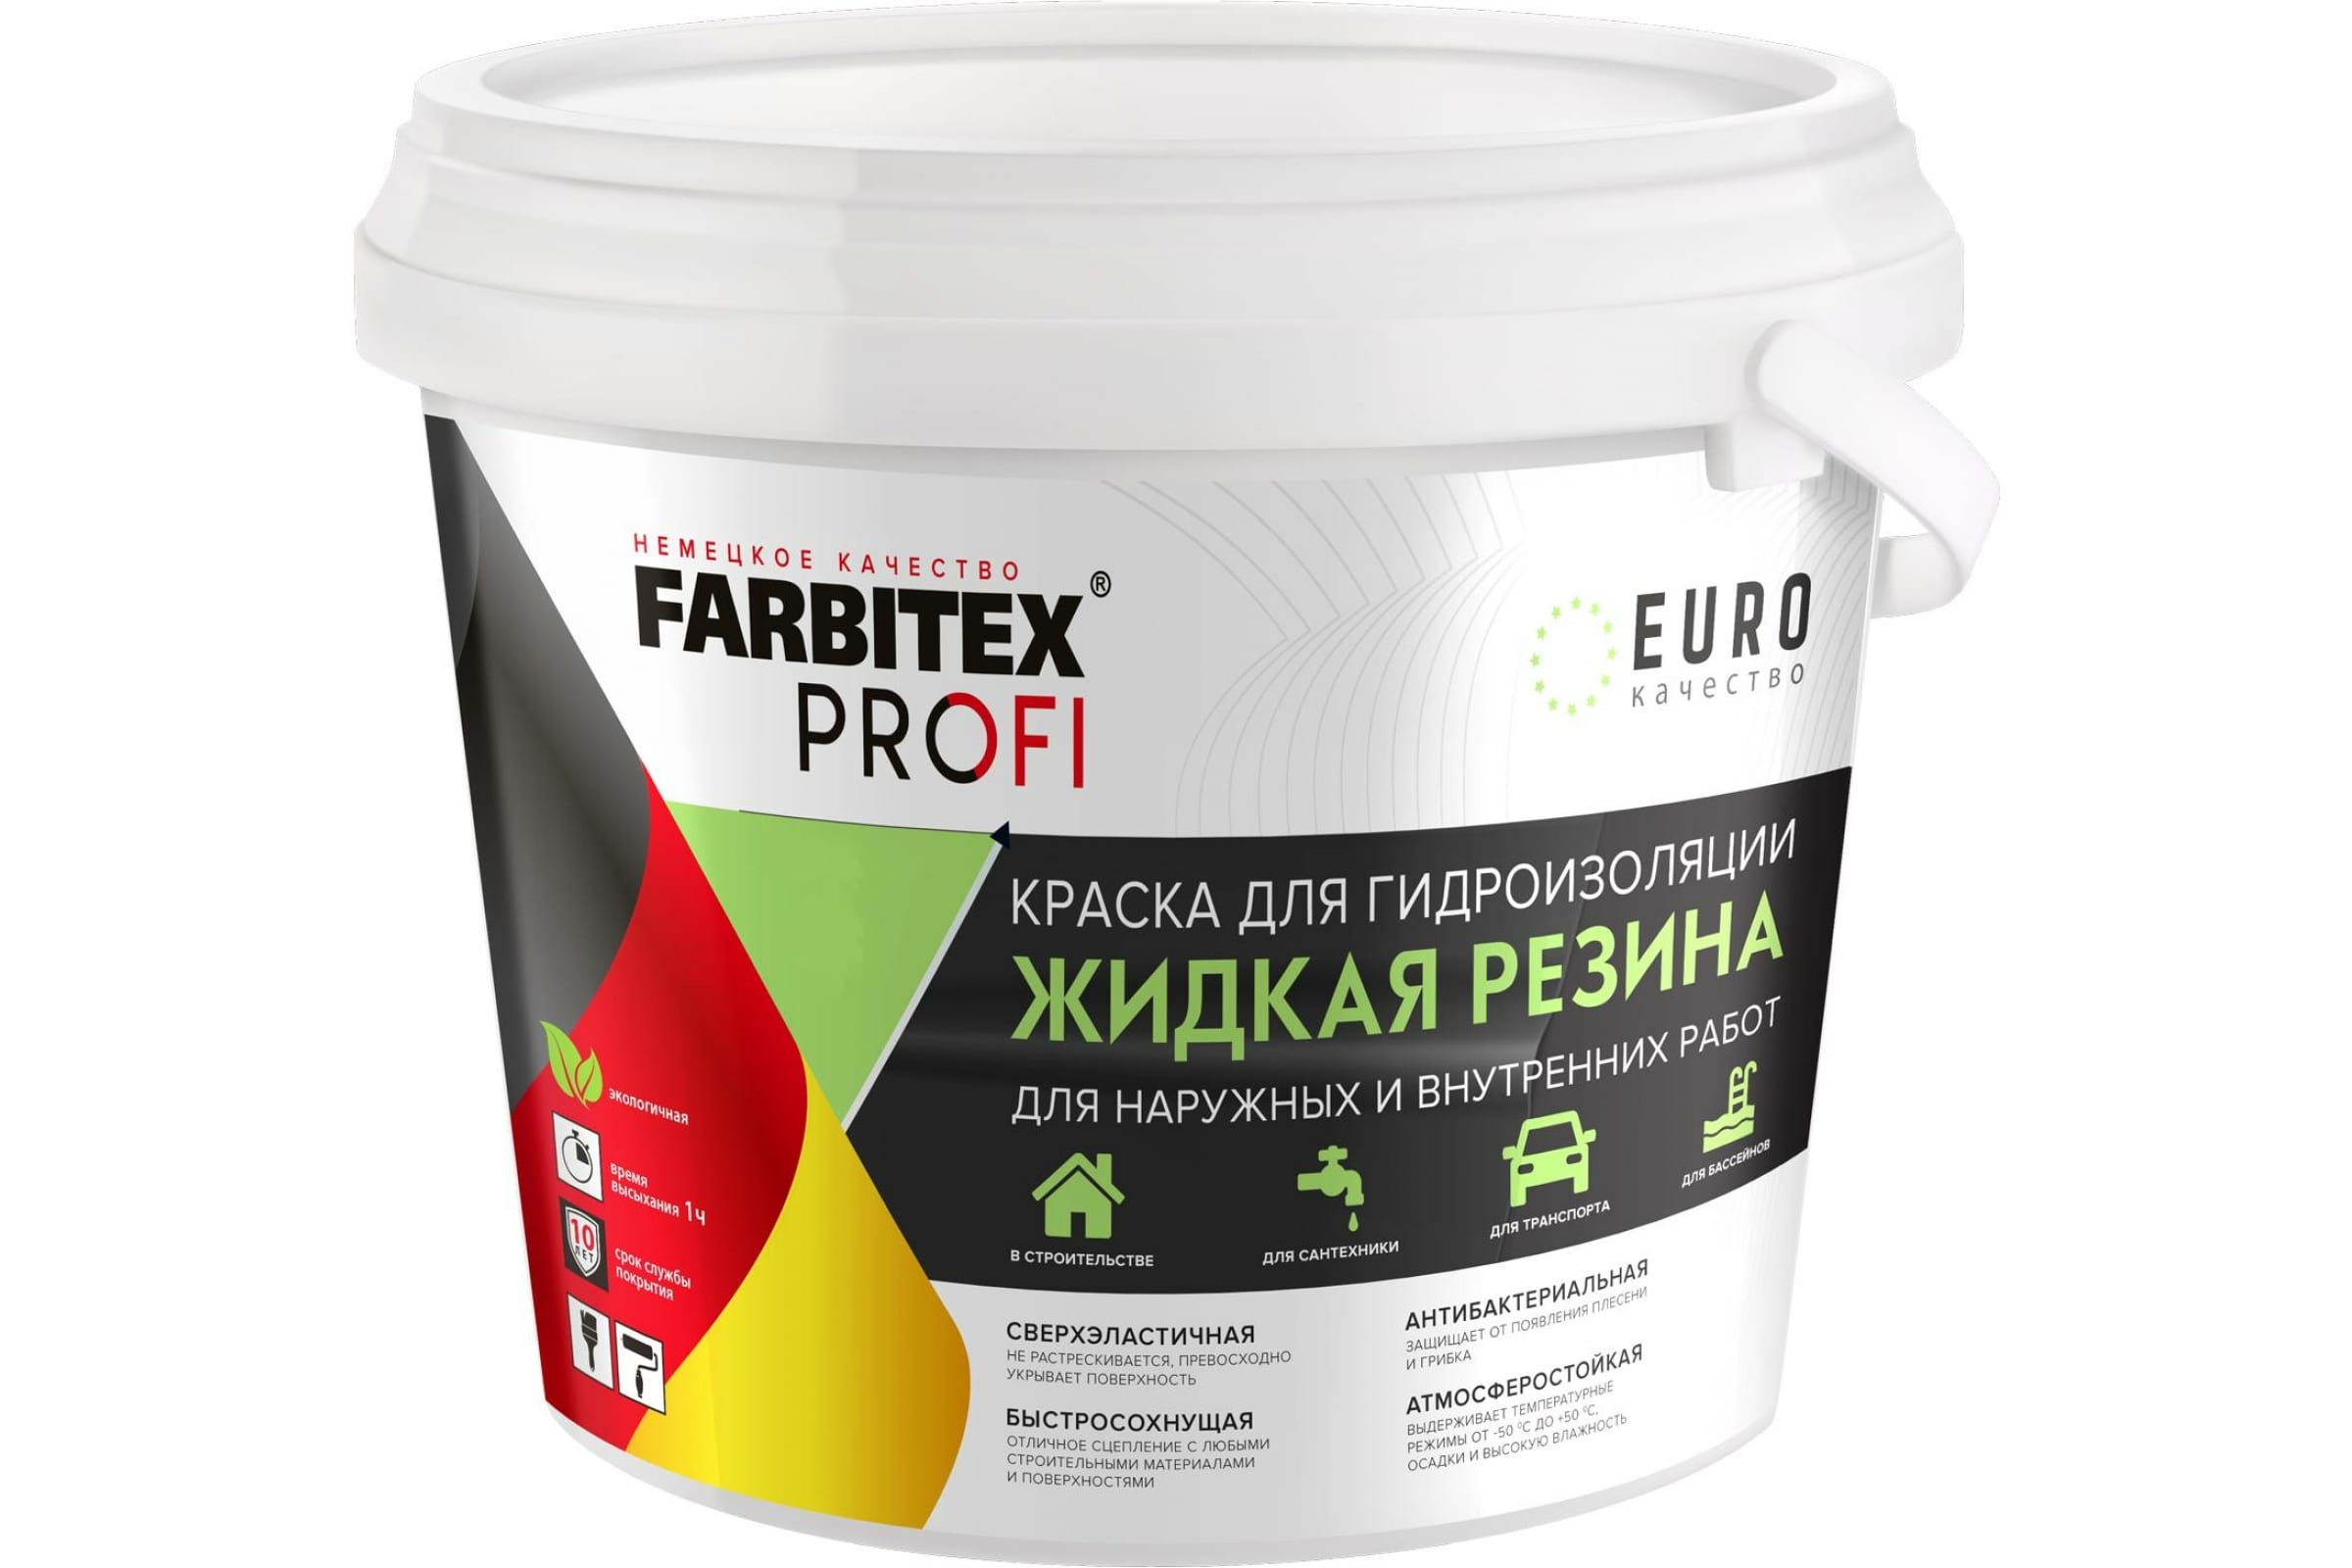 FARBITEX Краска акриловая для гидроизоляции Жидкая резина серый (1 кг) 4300008708 farbitex краска акриловая для гидроизоляции жидкая резина серый 1 кг 4300008708